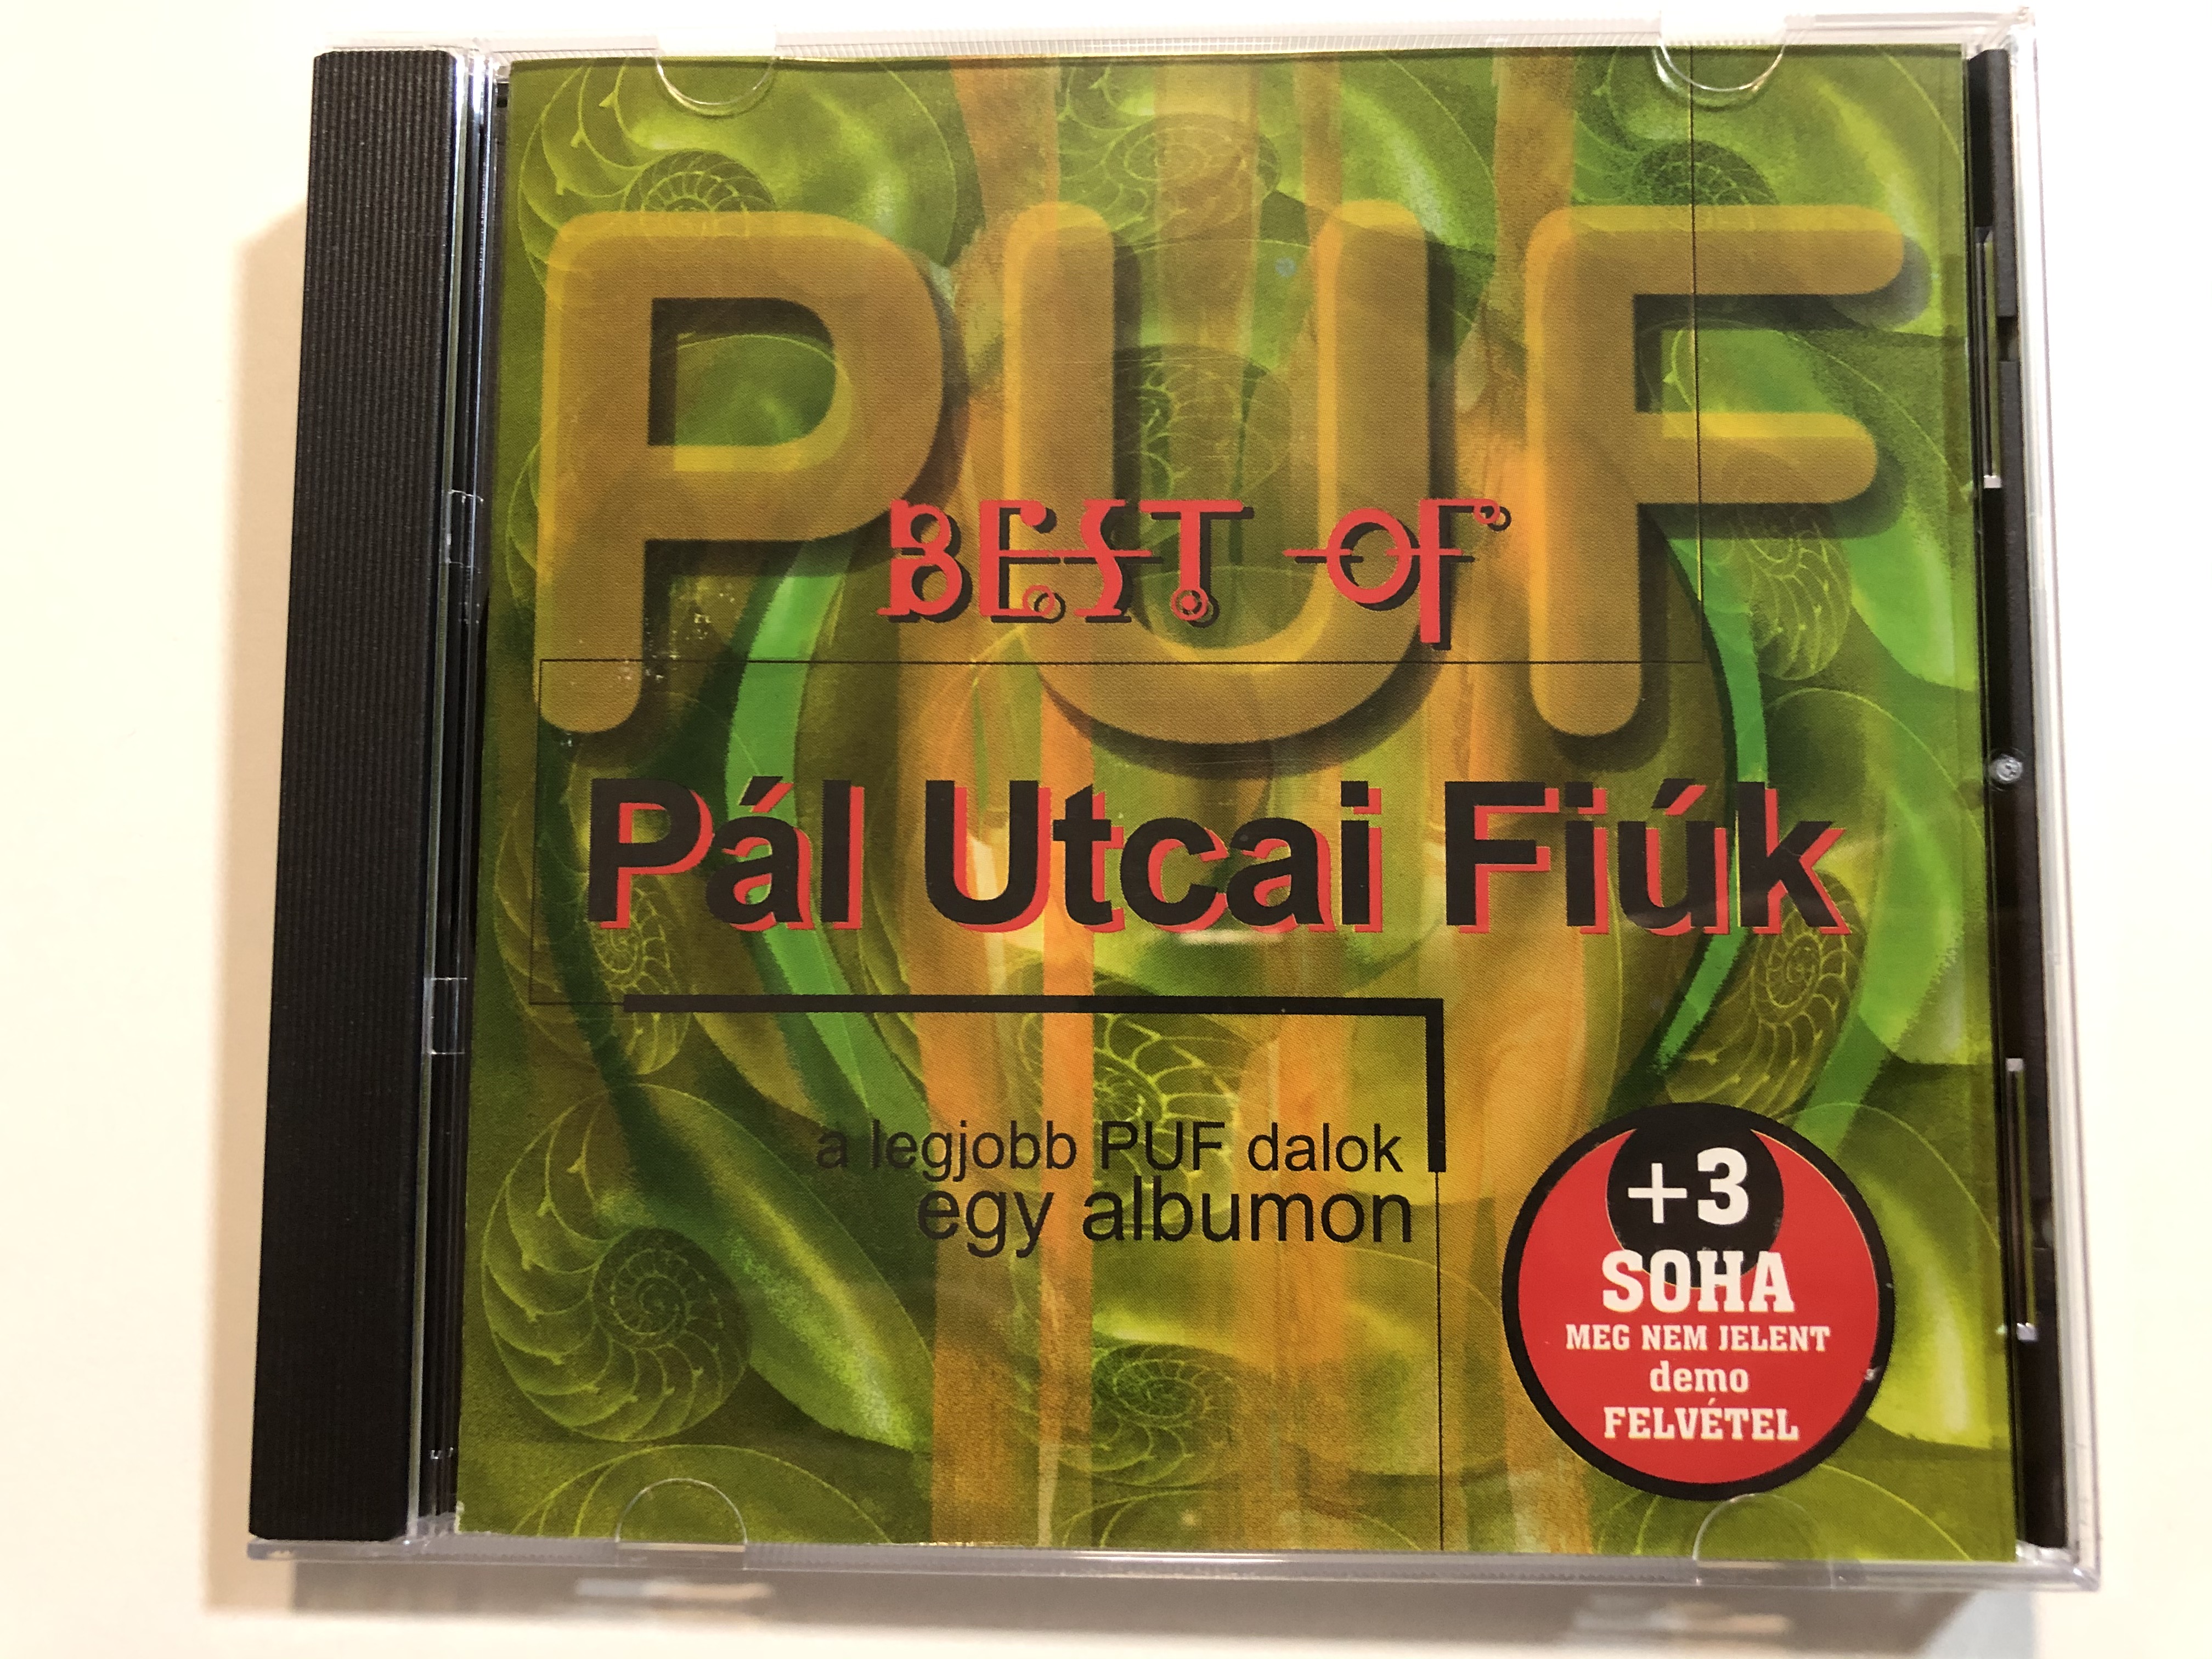 best-of-p-l-utcai-fi-k-a-legjobb-puf-dalok-egy-albumom-3-soha-meg-nema-jelent-demo-felvetel-emi-quint-audio-cd-1997-8238892-1-.jpg